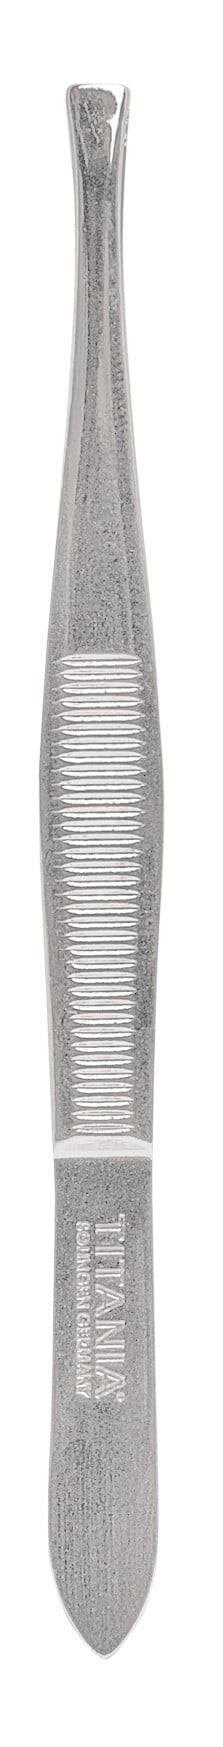 Пинцет узкий Titania Solingen 8 см (1071-A) - фото 1